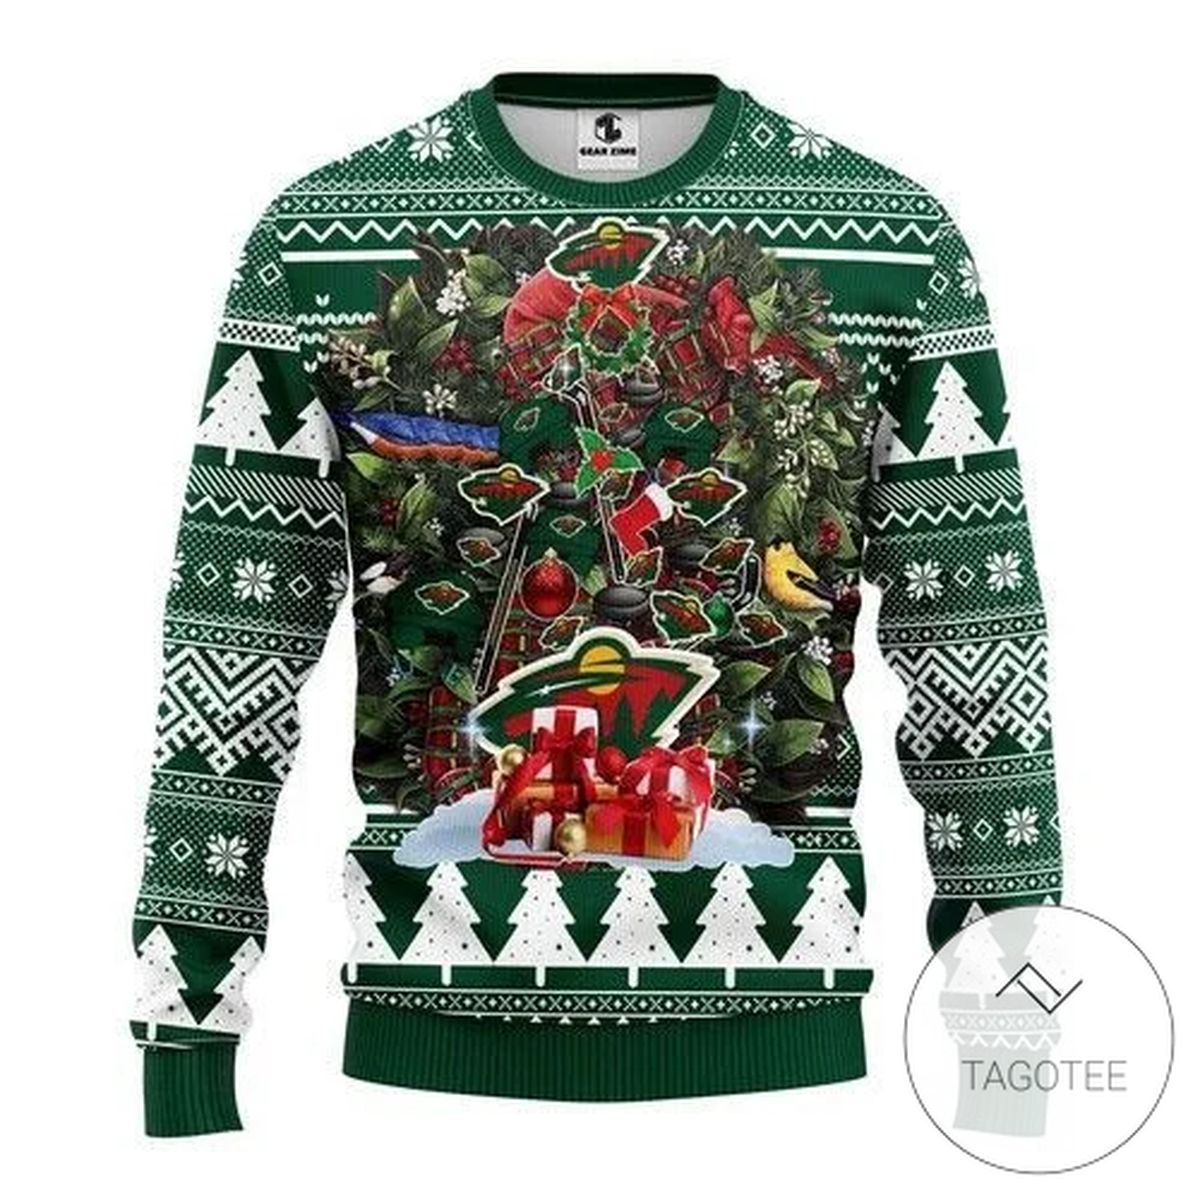 Nhl Minnesota Wild Sweatshirt Knitted Ugly Christmas Sweater